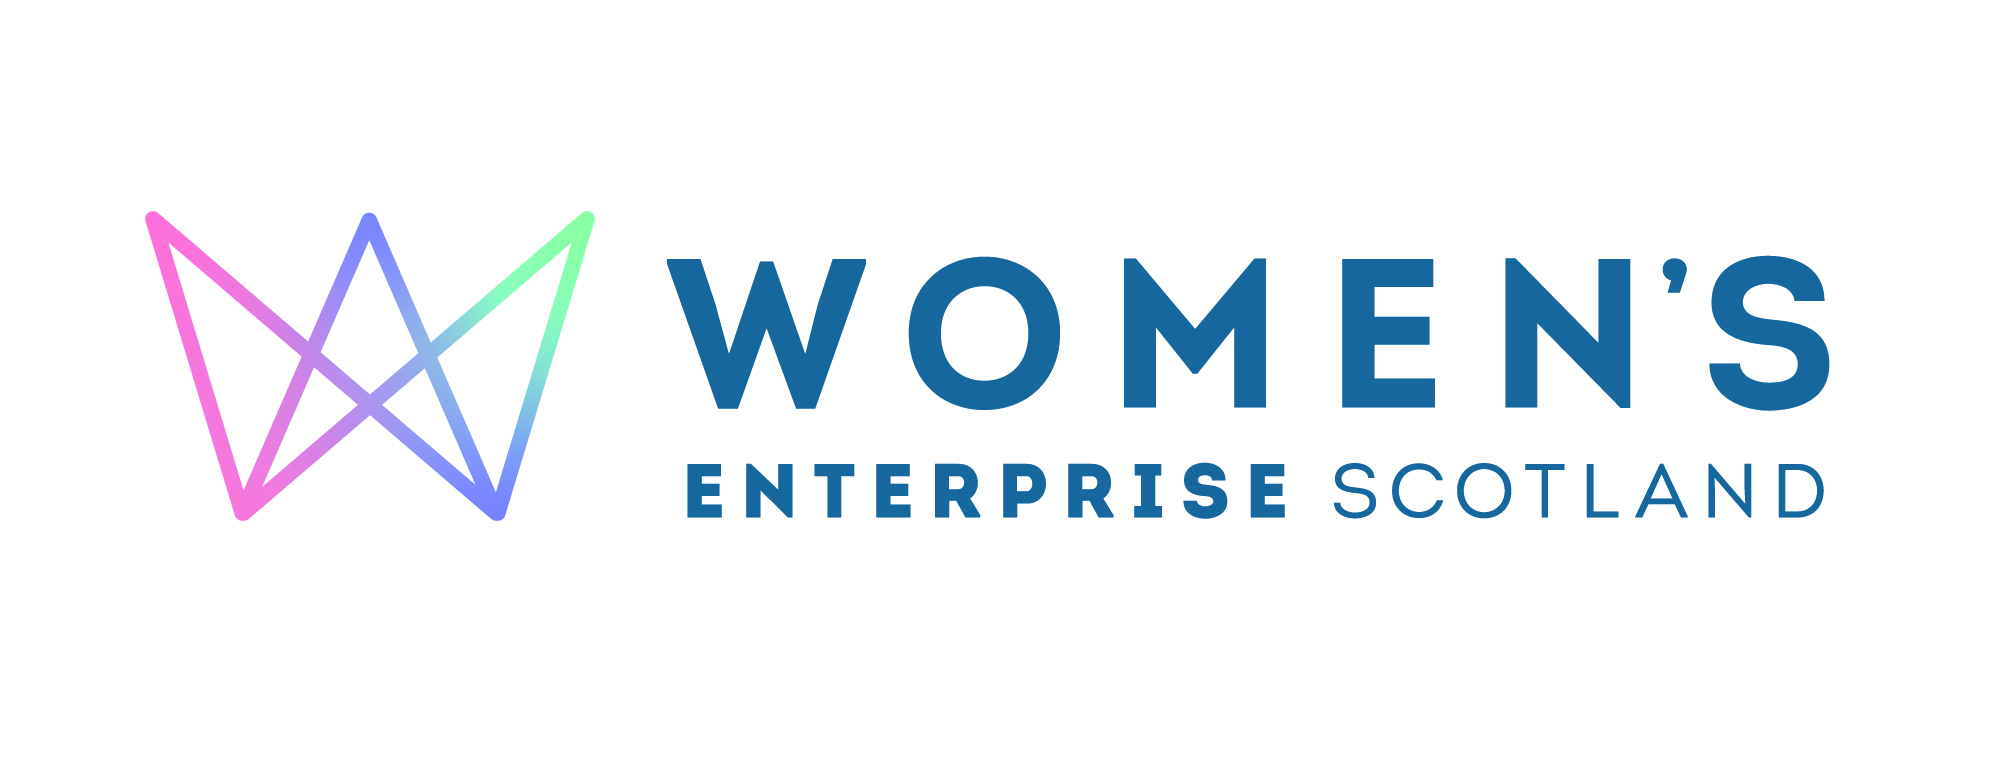 Women's Enterprise Scotland